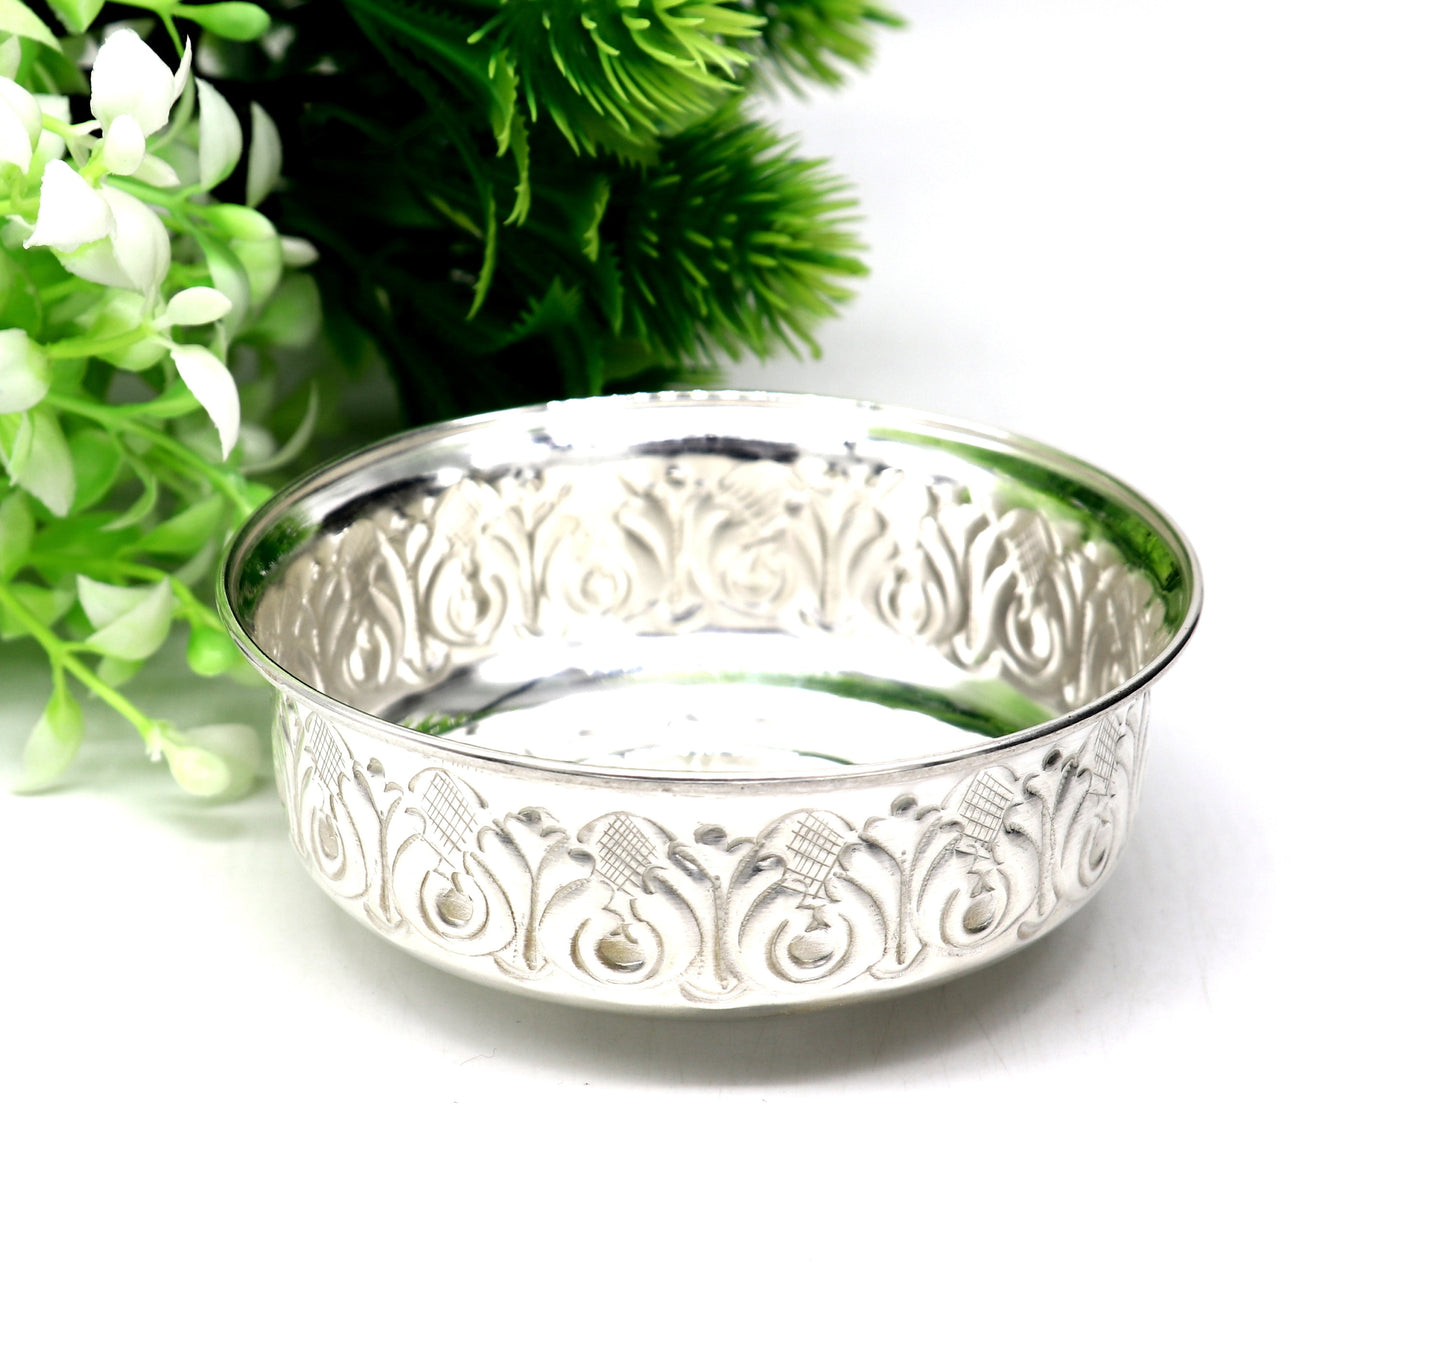 999 fine silver handmade kandrai nakshi work bowl, silver puja vessel, silver worshipping/puja utensils prasad bowl baby bowl sv215 - TRIBAL ORNAMENTS